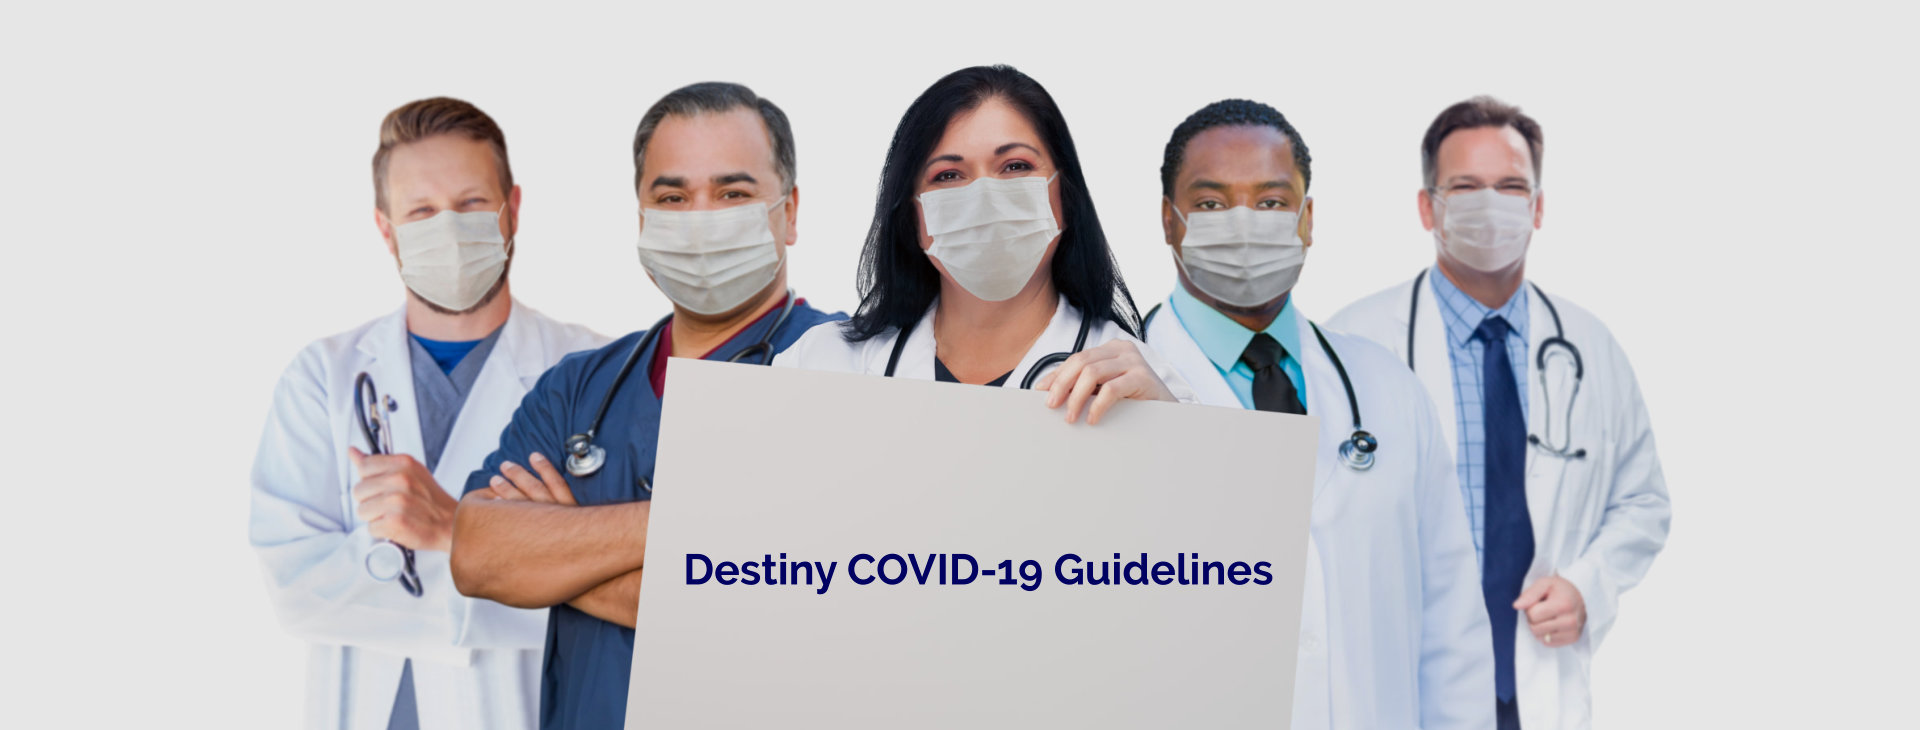 Destiny COVID-19 Guidelines